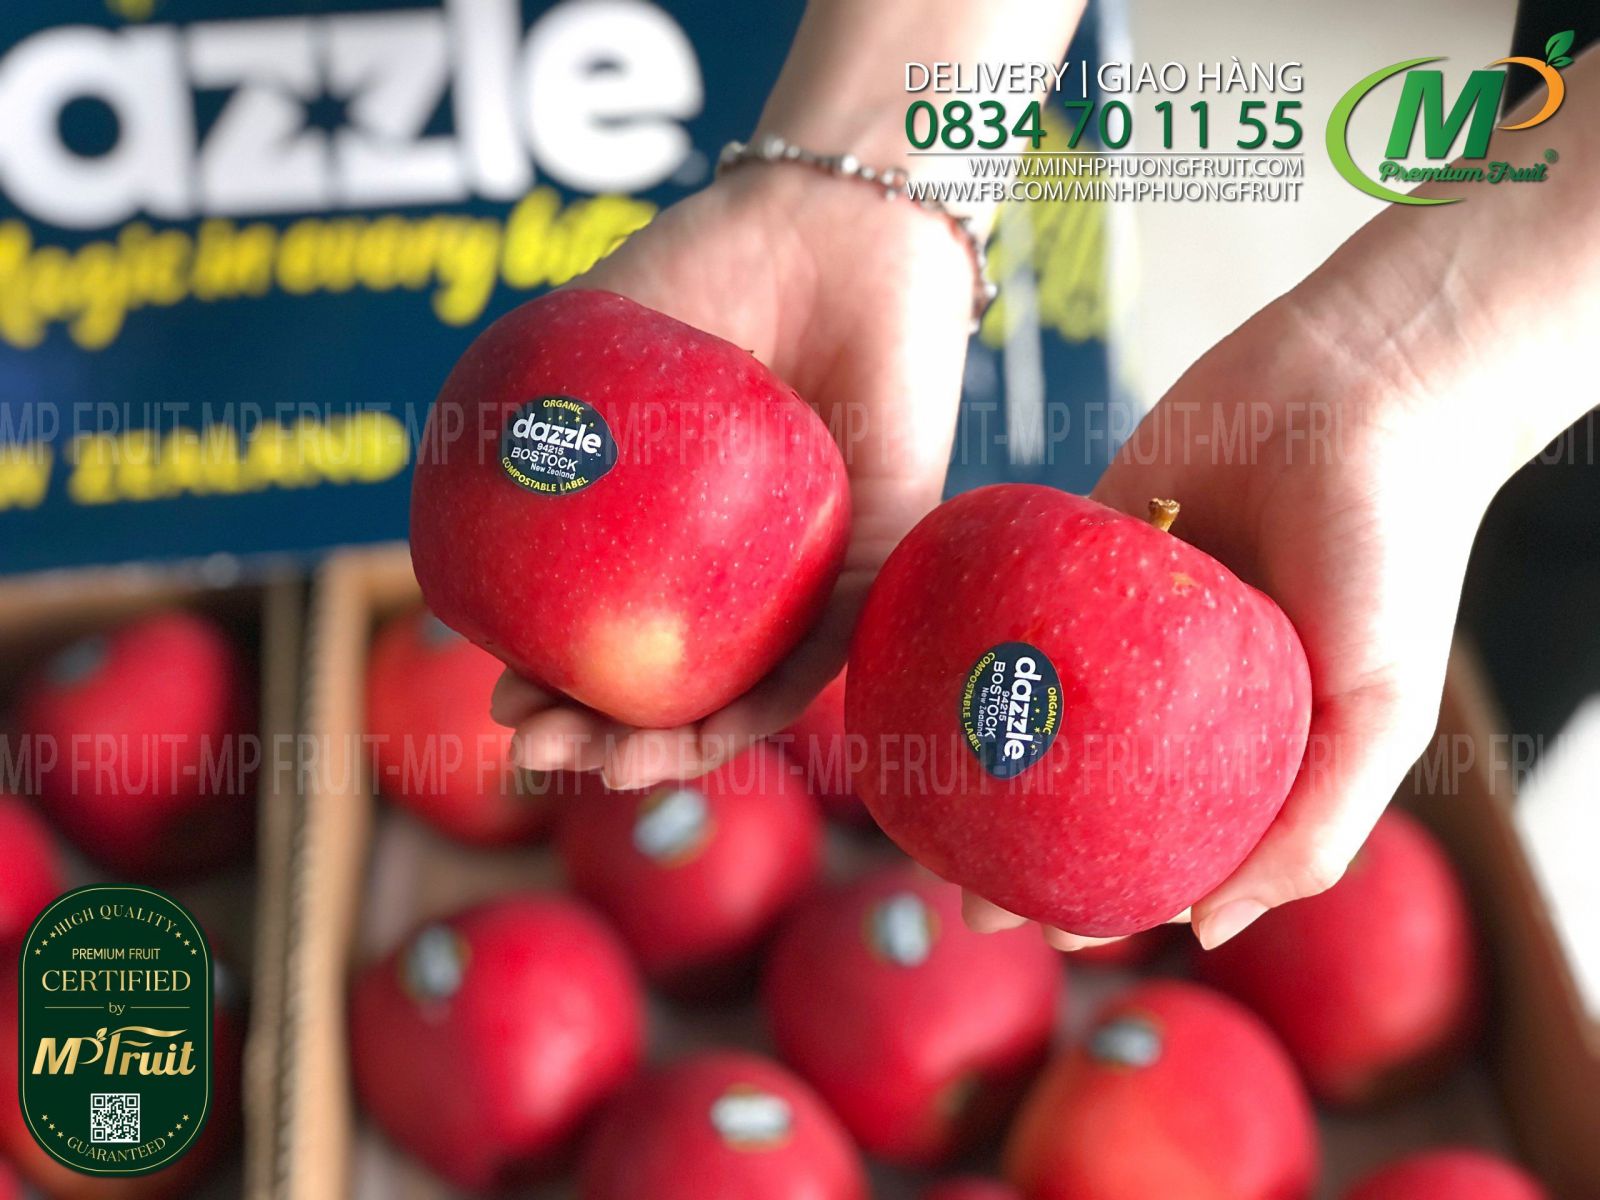 Táo Dazzle Organic New Zealand tại MP Fruit